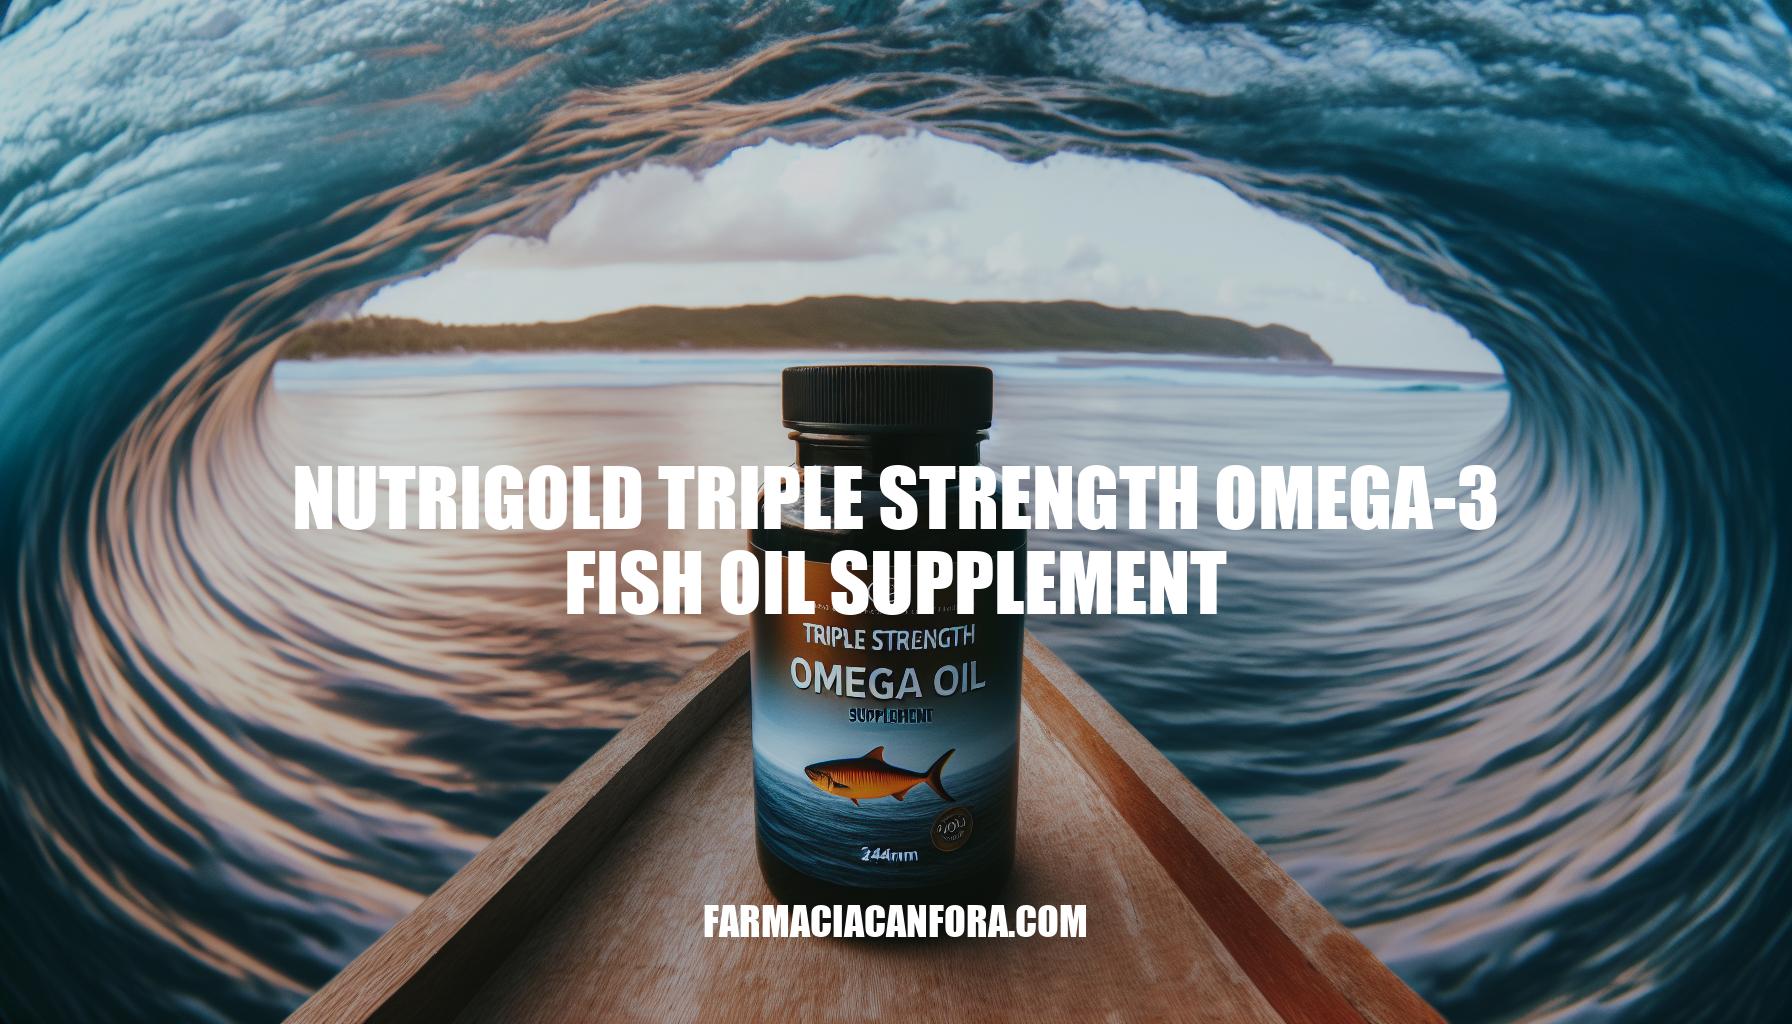 Benefits of Nutrigold Triple Strength Omega-3 Fish Oil Supplement